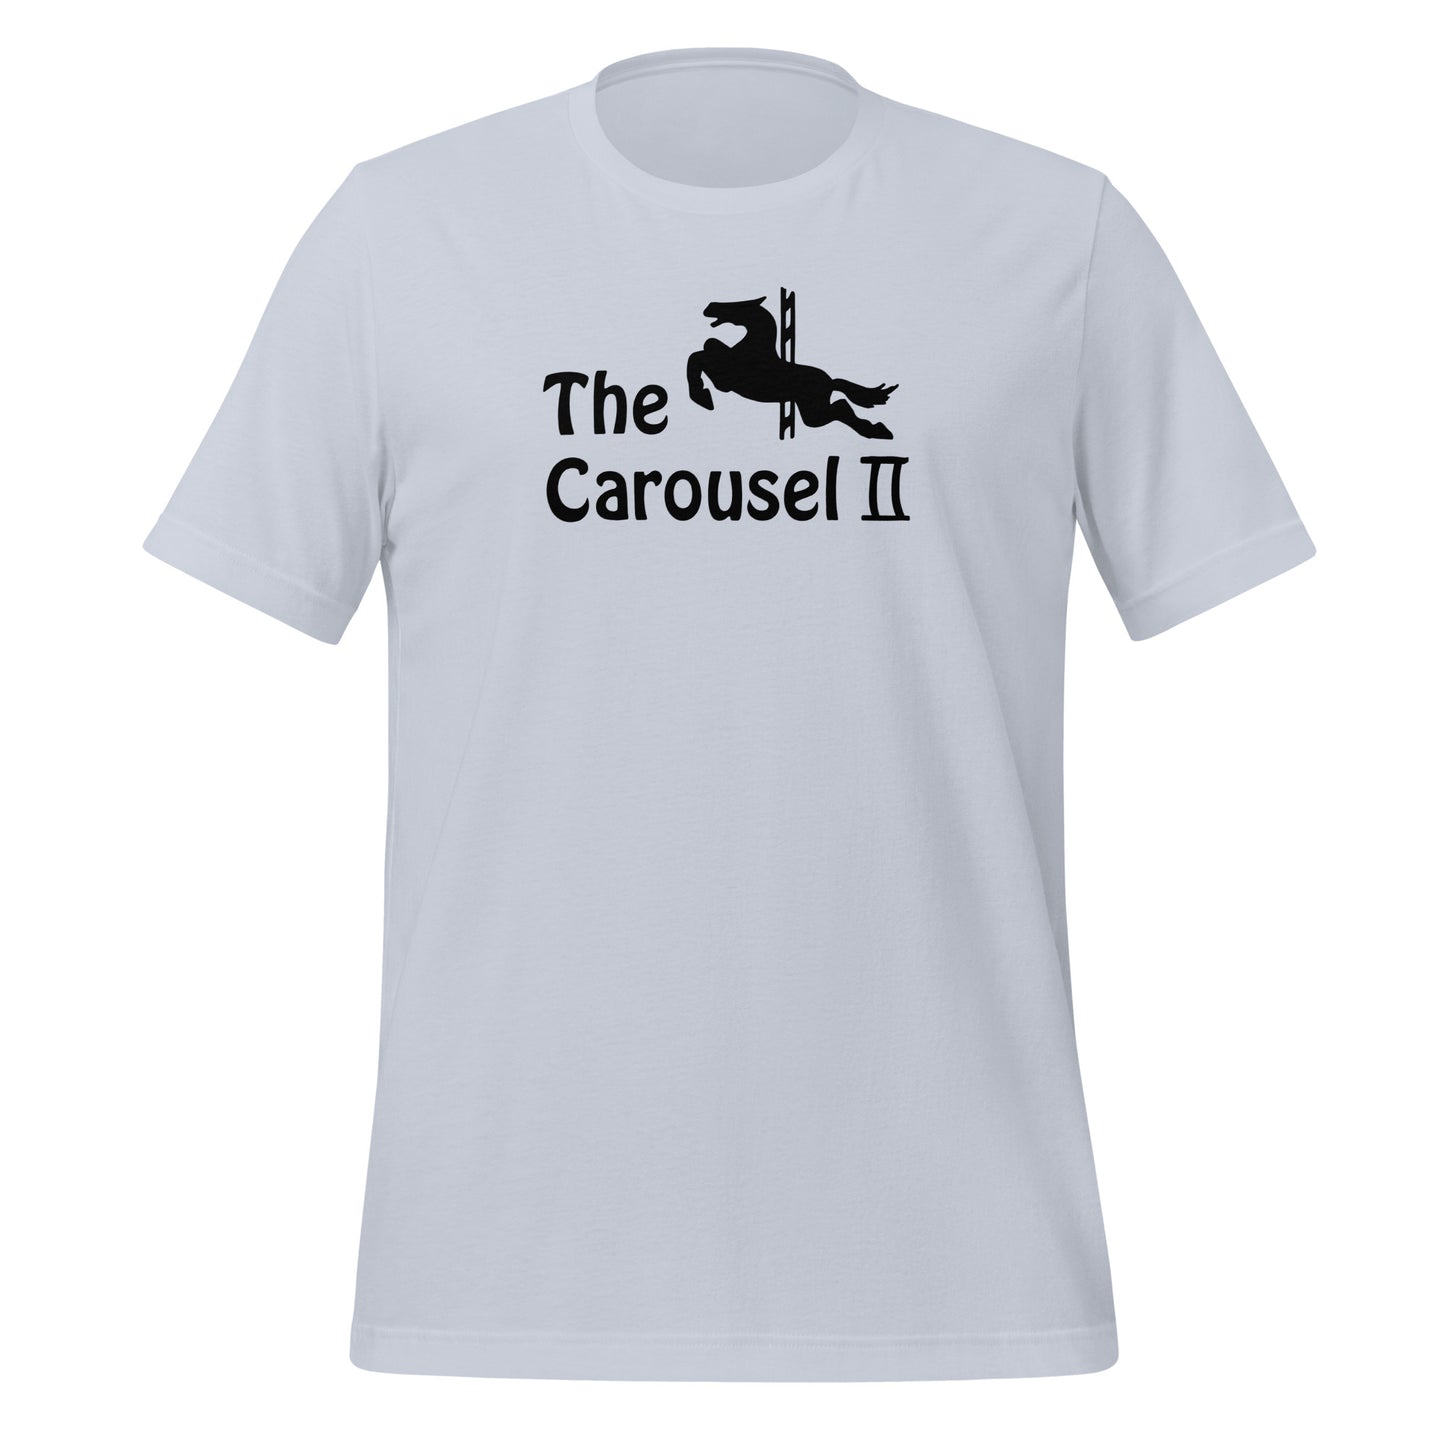 Carousel II unisex printed t-shirt